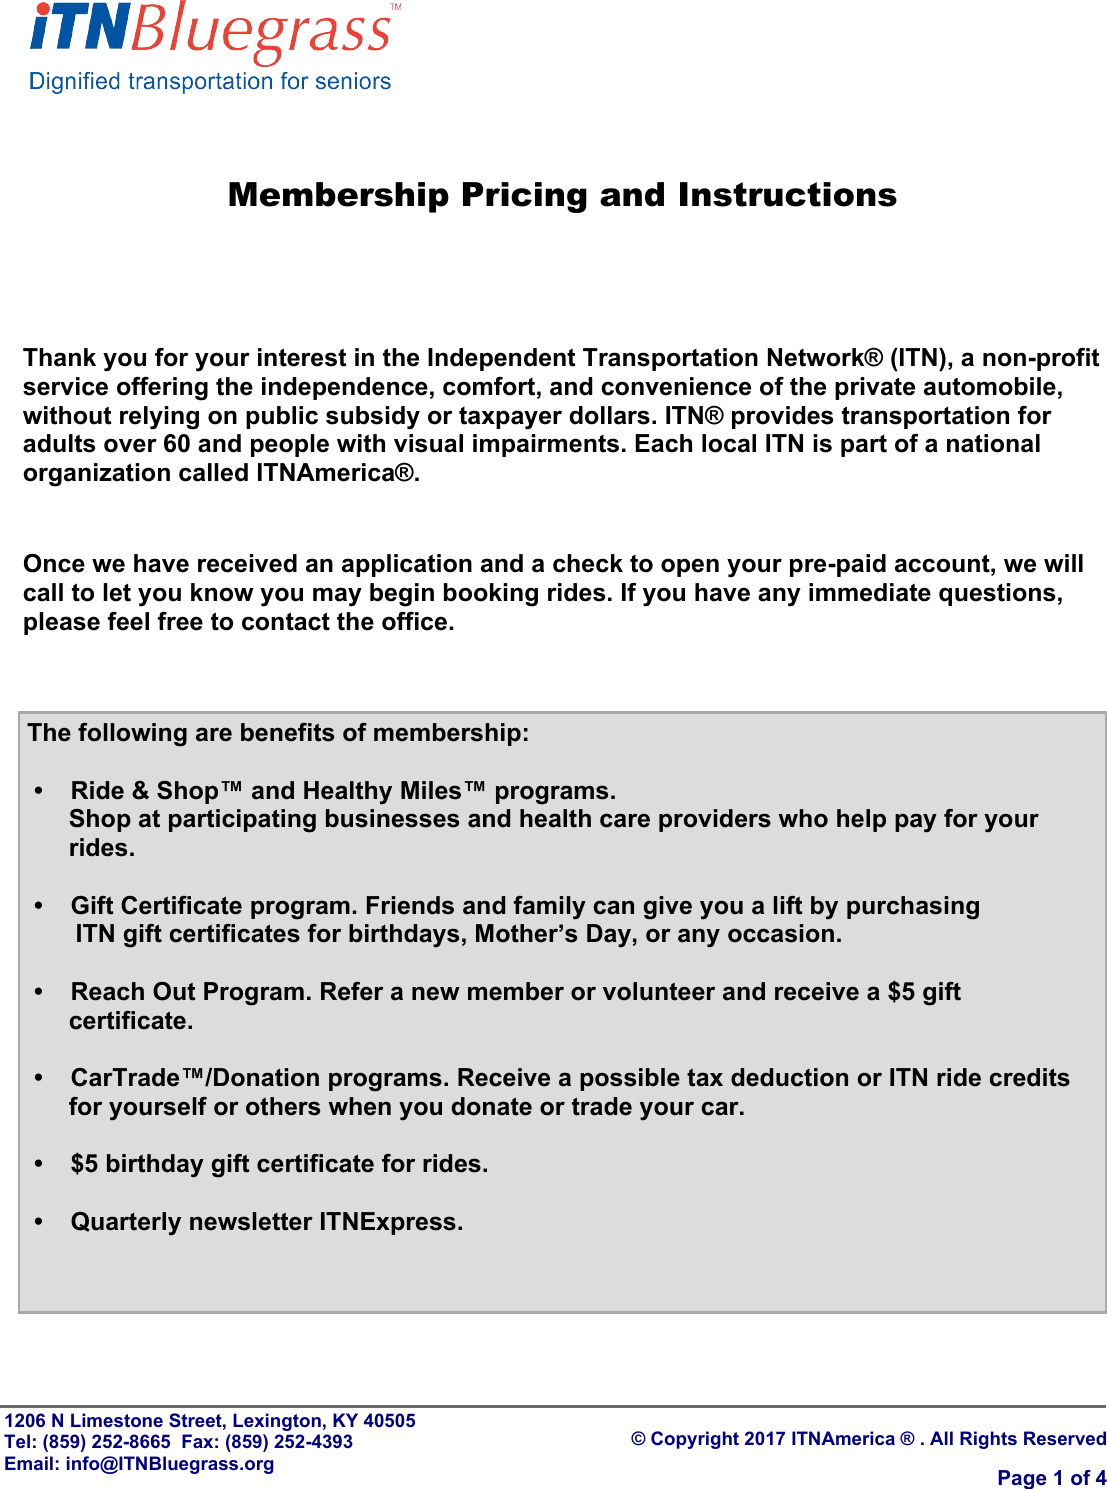 Page 1 of 4 - RptMembershipApplicationInstructions Membership Application Instructions